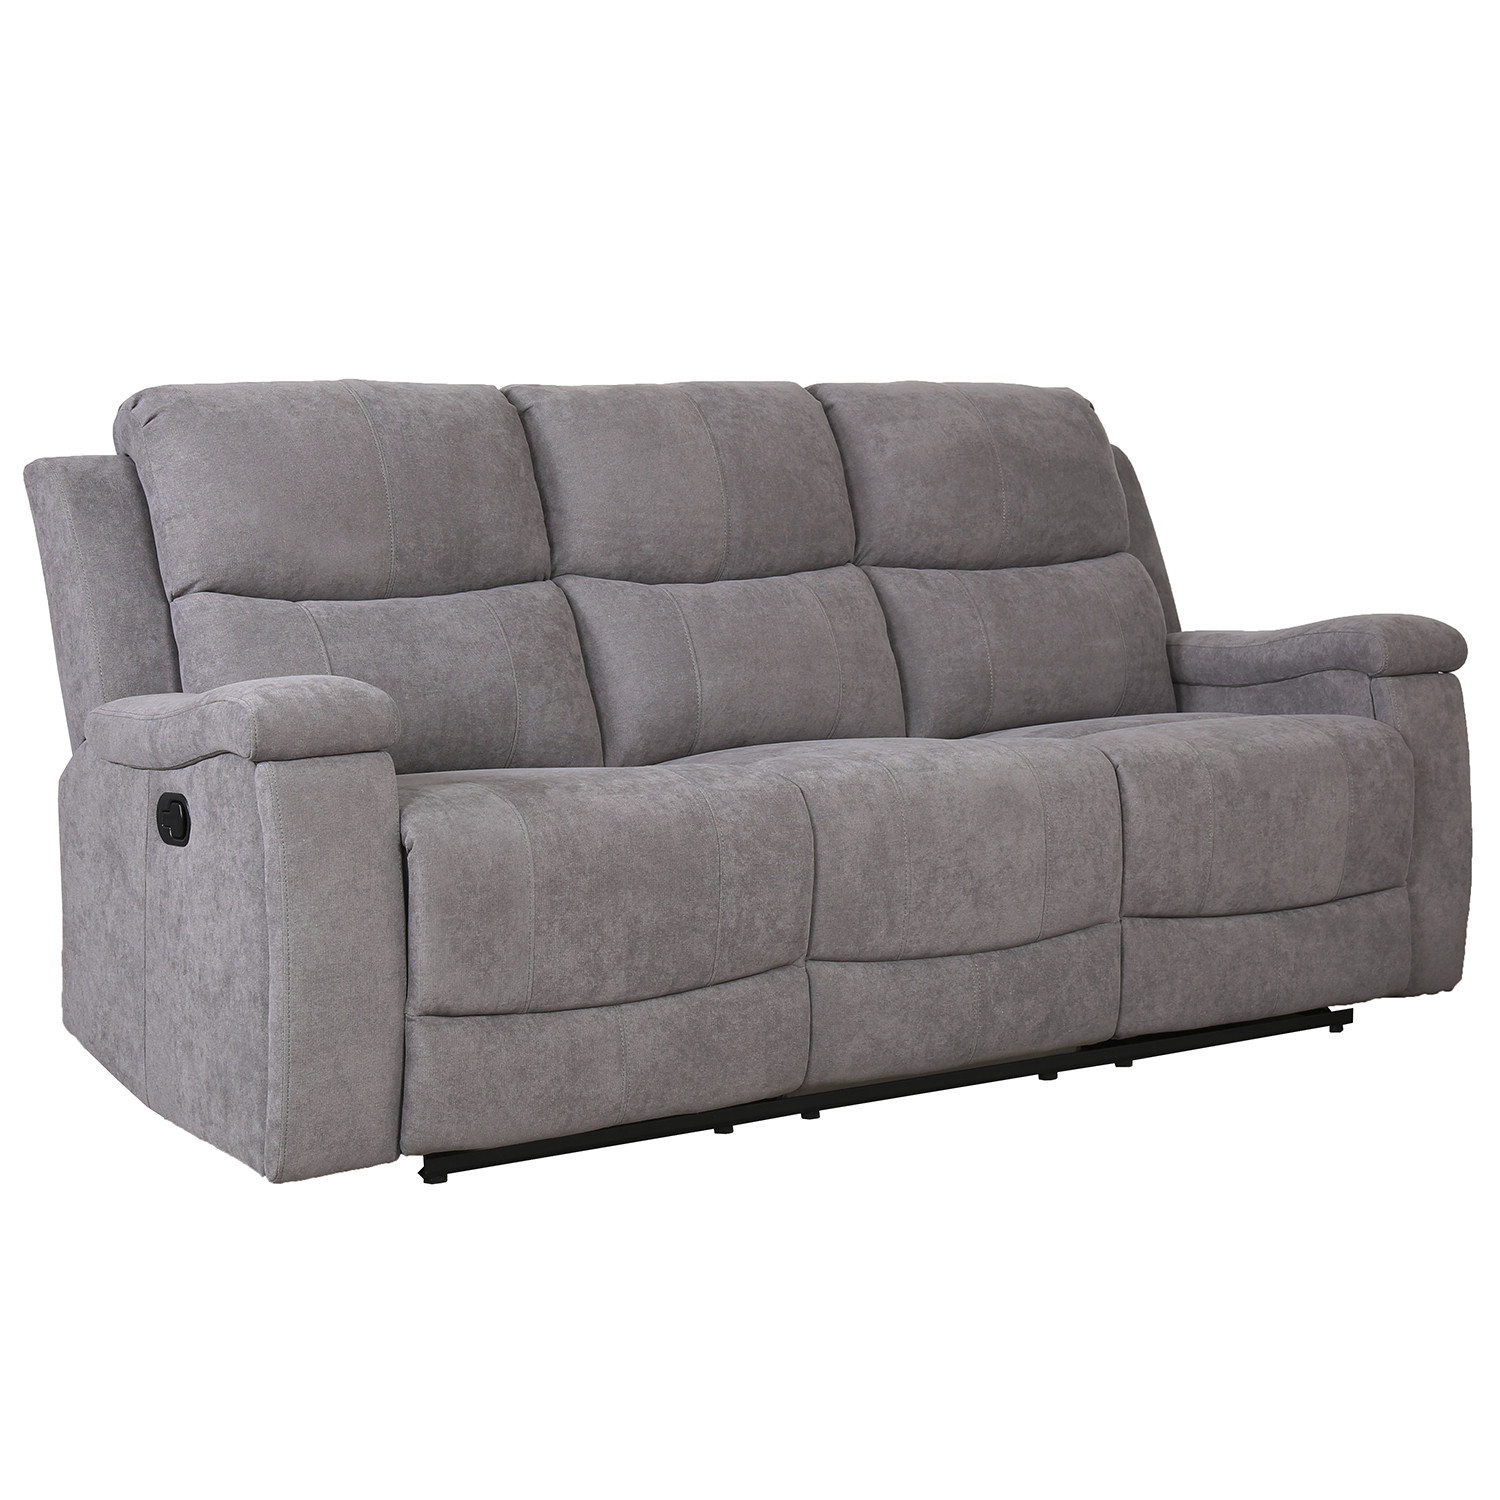 Ledbury 3 Seater Grey Fabric Manual Recliner Sofa Image 2